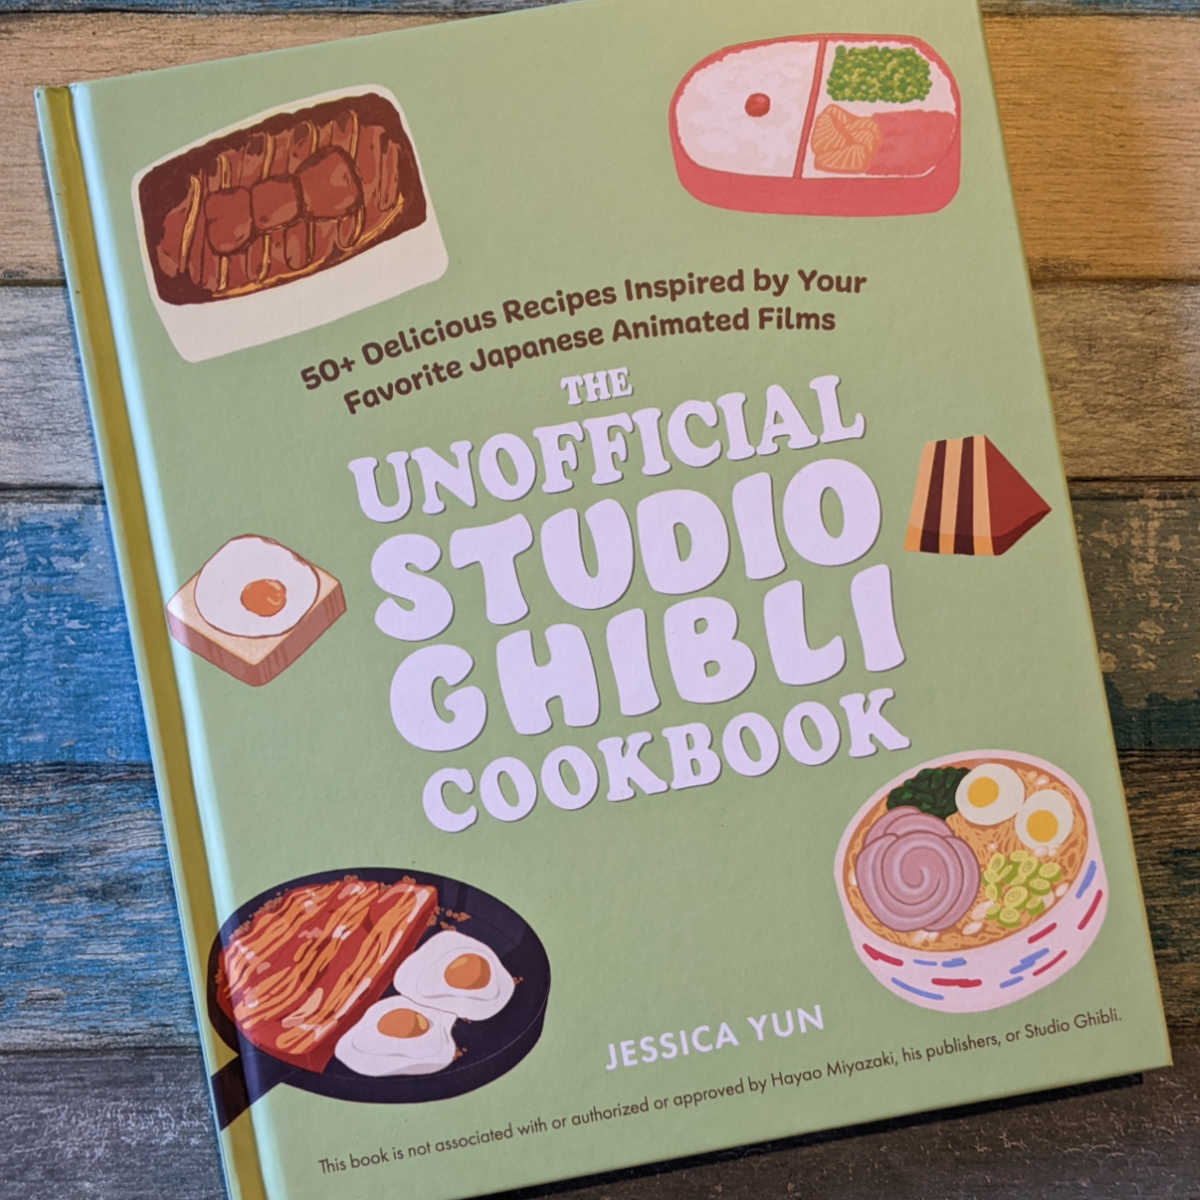 the studio ghibli cookbook